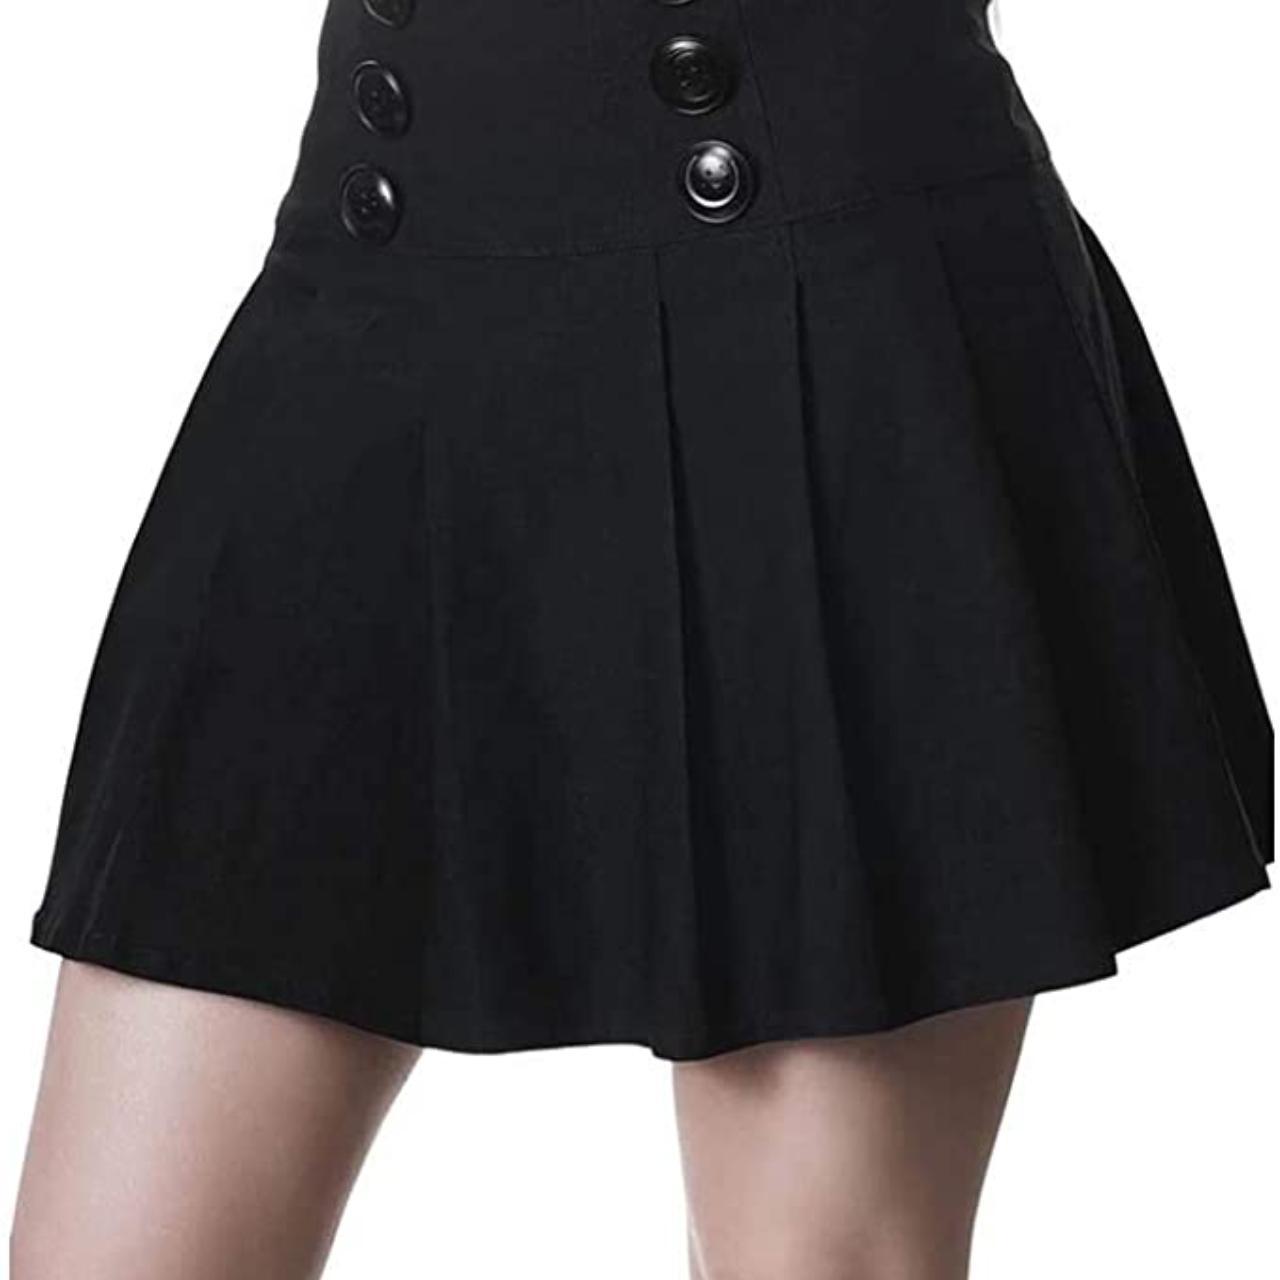 Killstar Tsukiko Skirt. Black pleated skirt with... - Depop